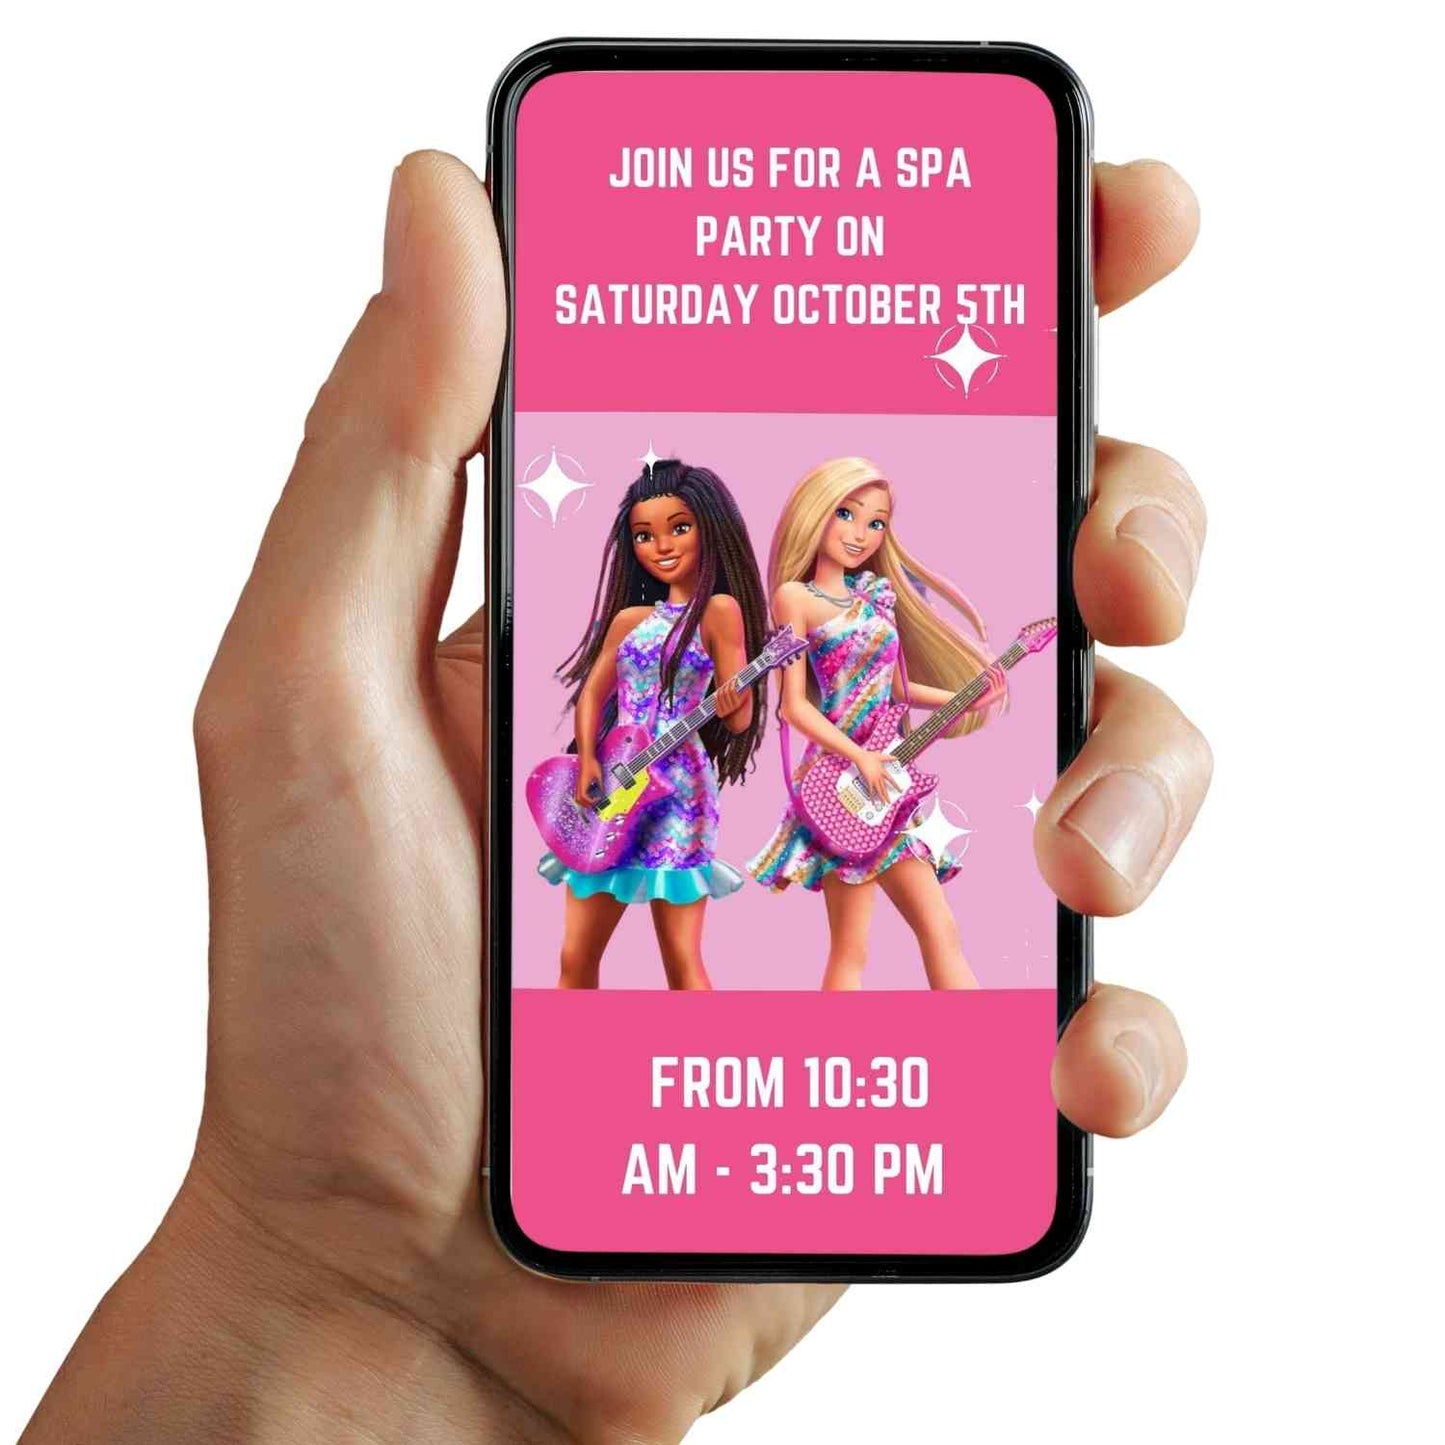 Sparkling Barbie Spa Birthday Video Invitation | Animated, Glamorous, and Fun-Filled Celebration!